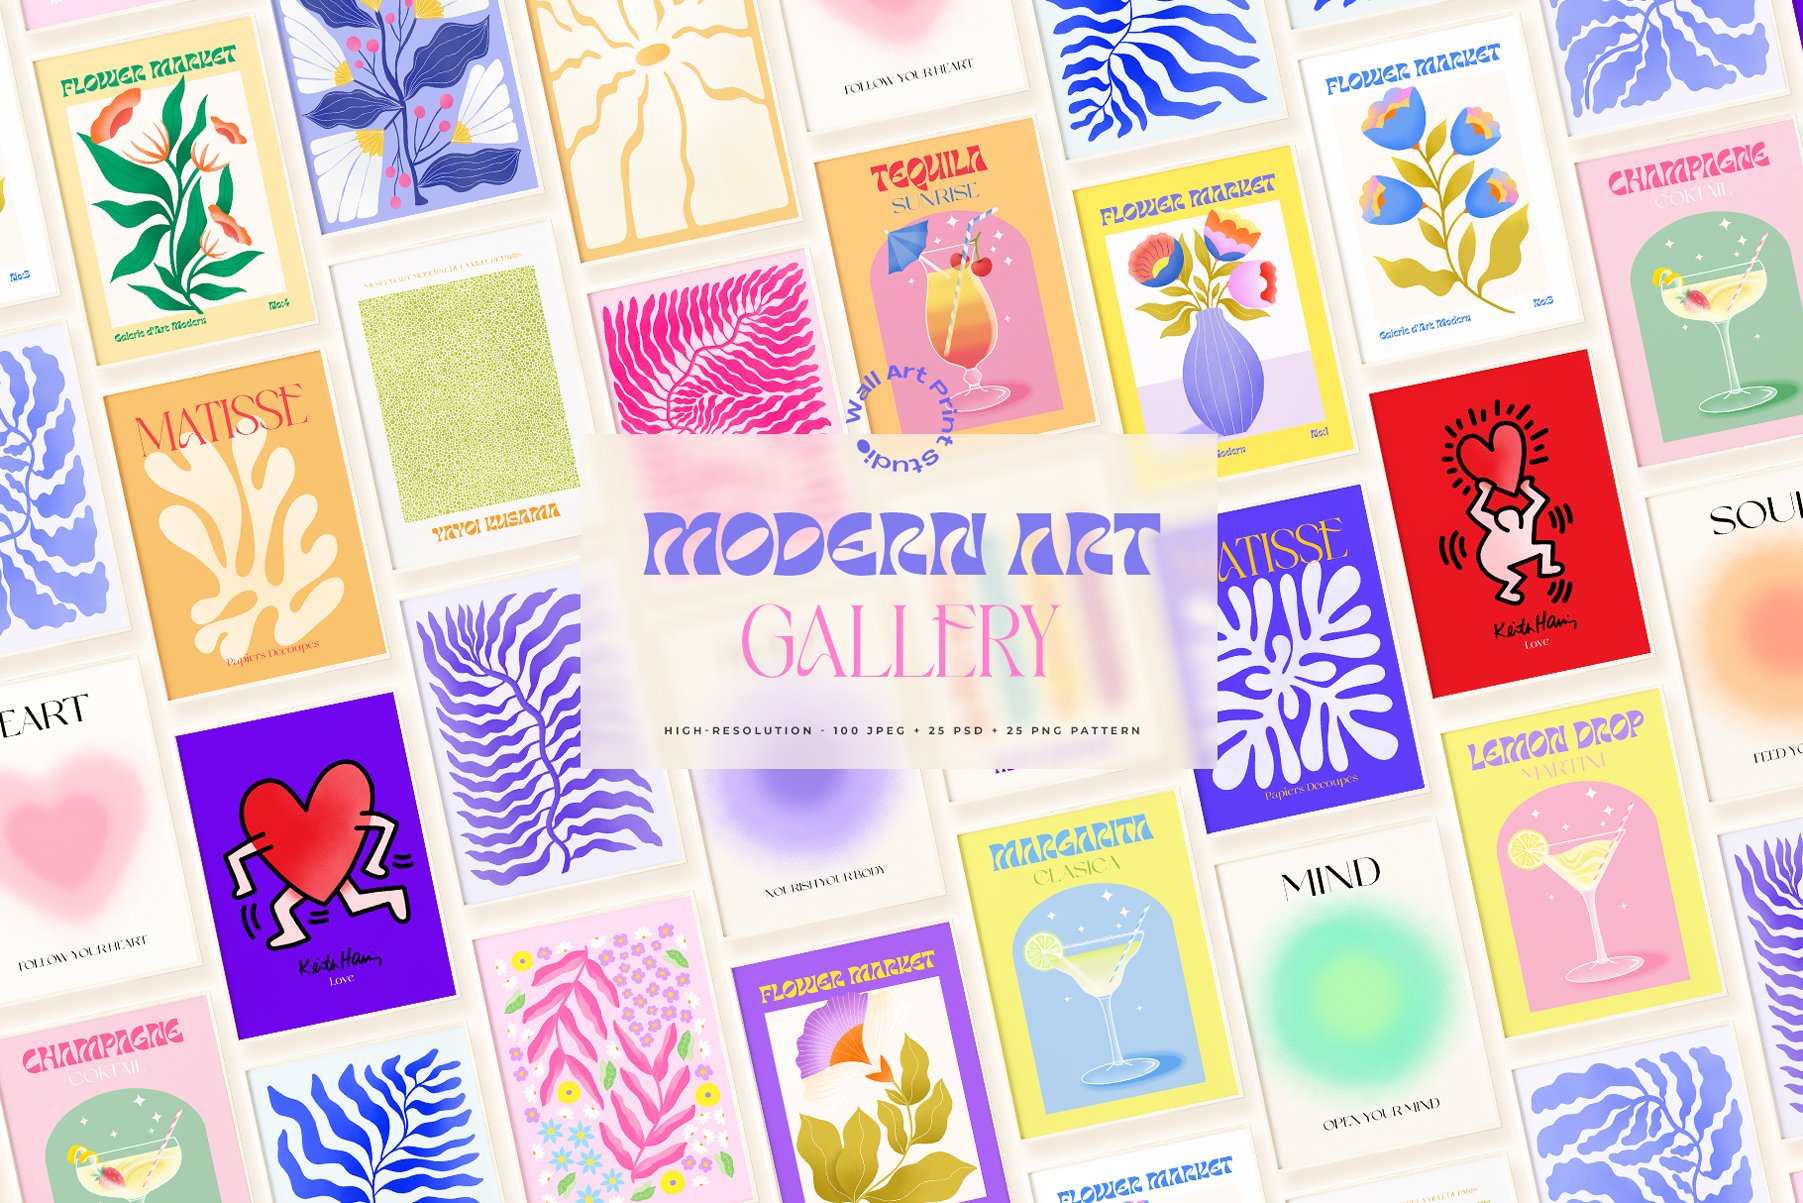 Modern Art Gallery cover image.